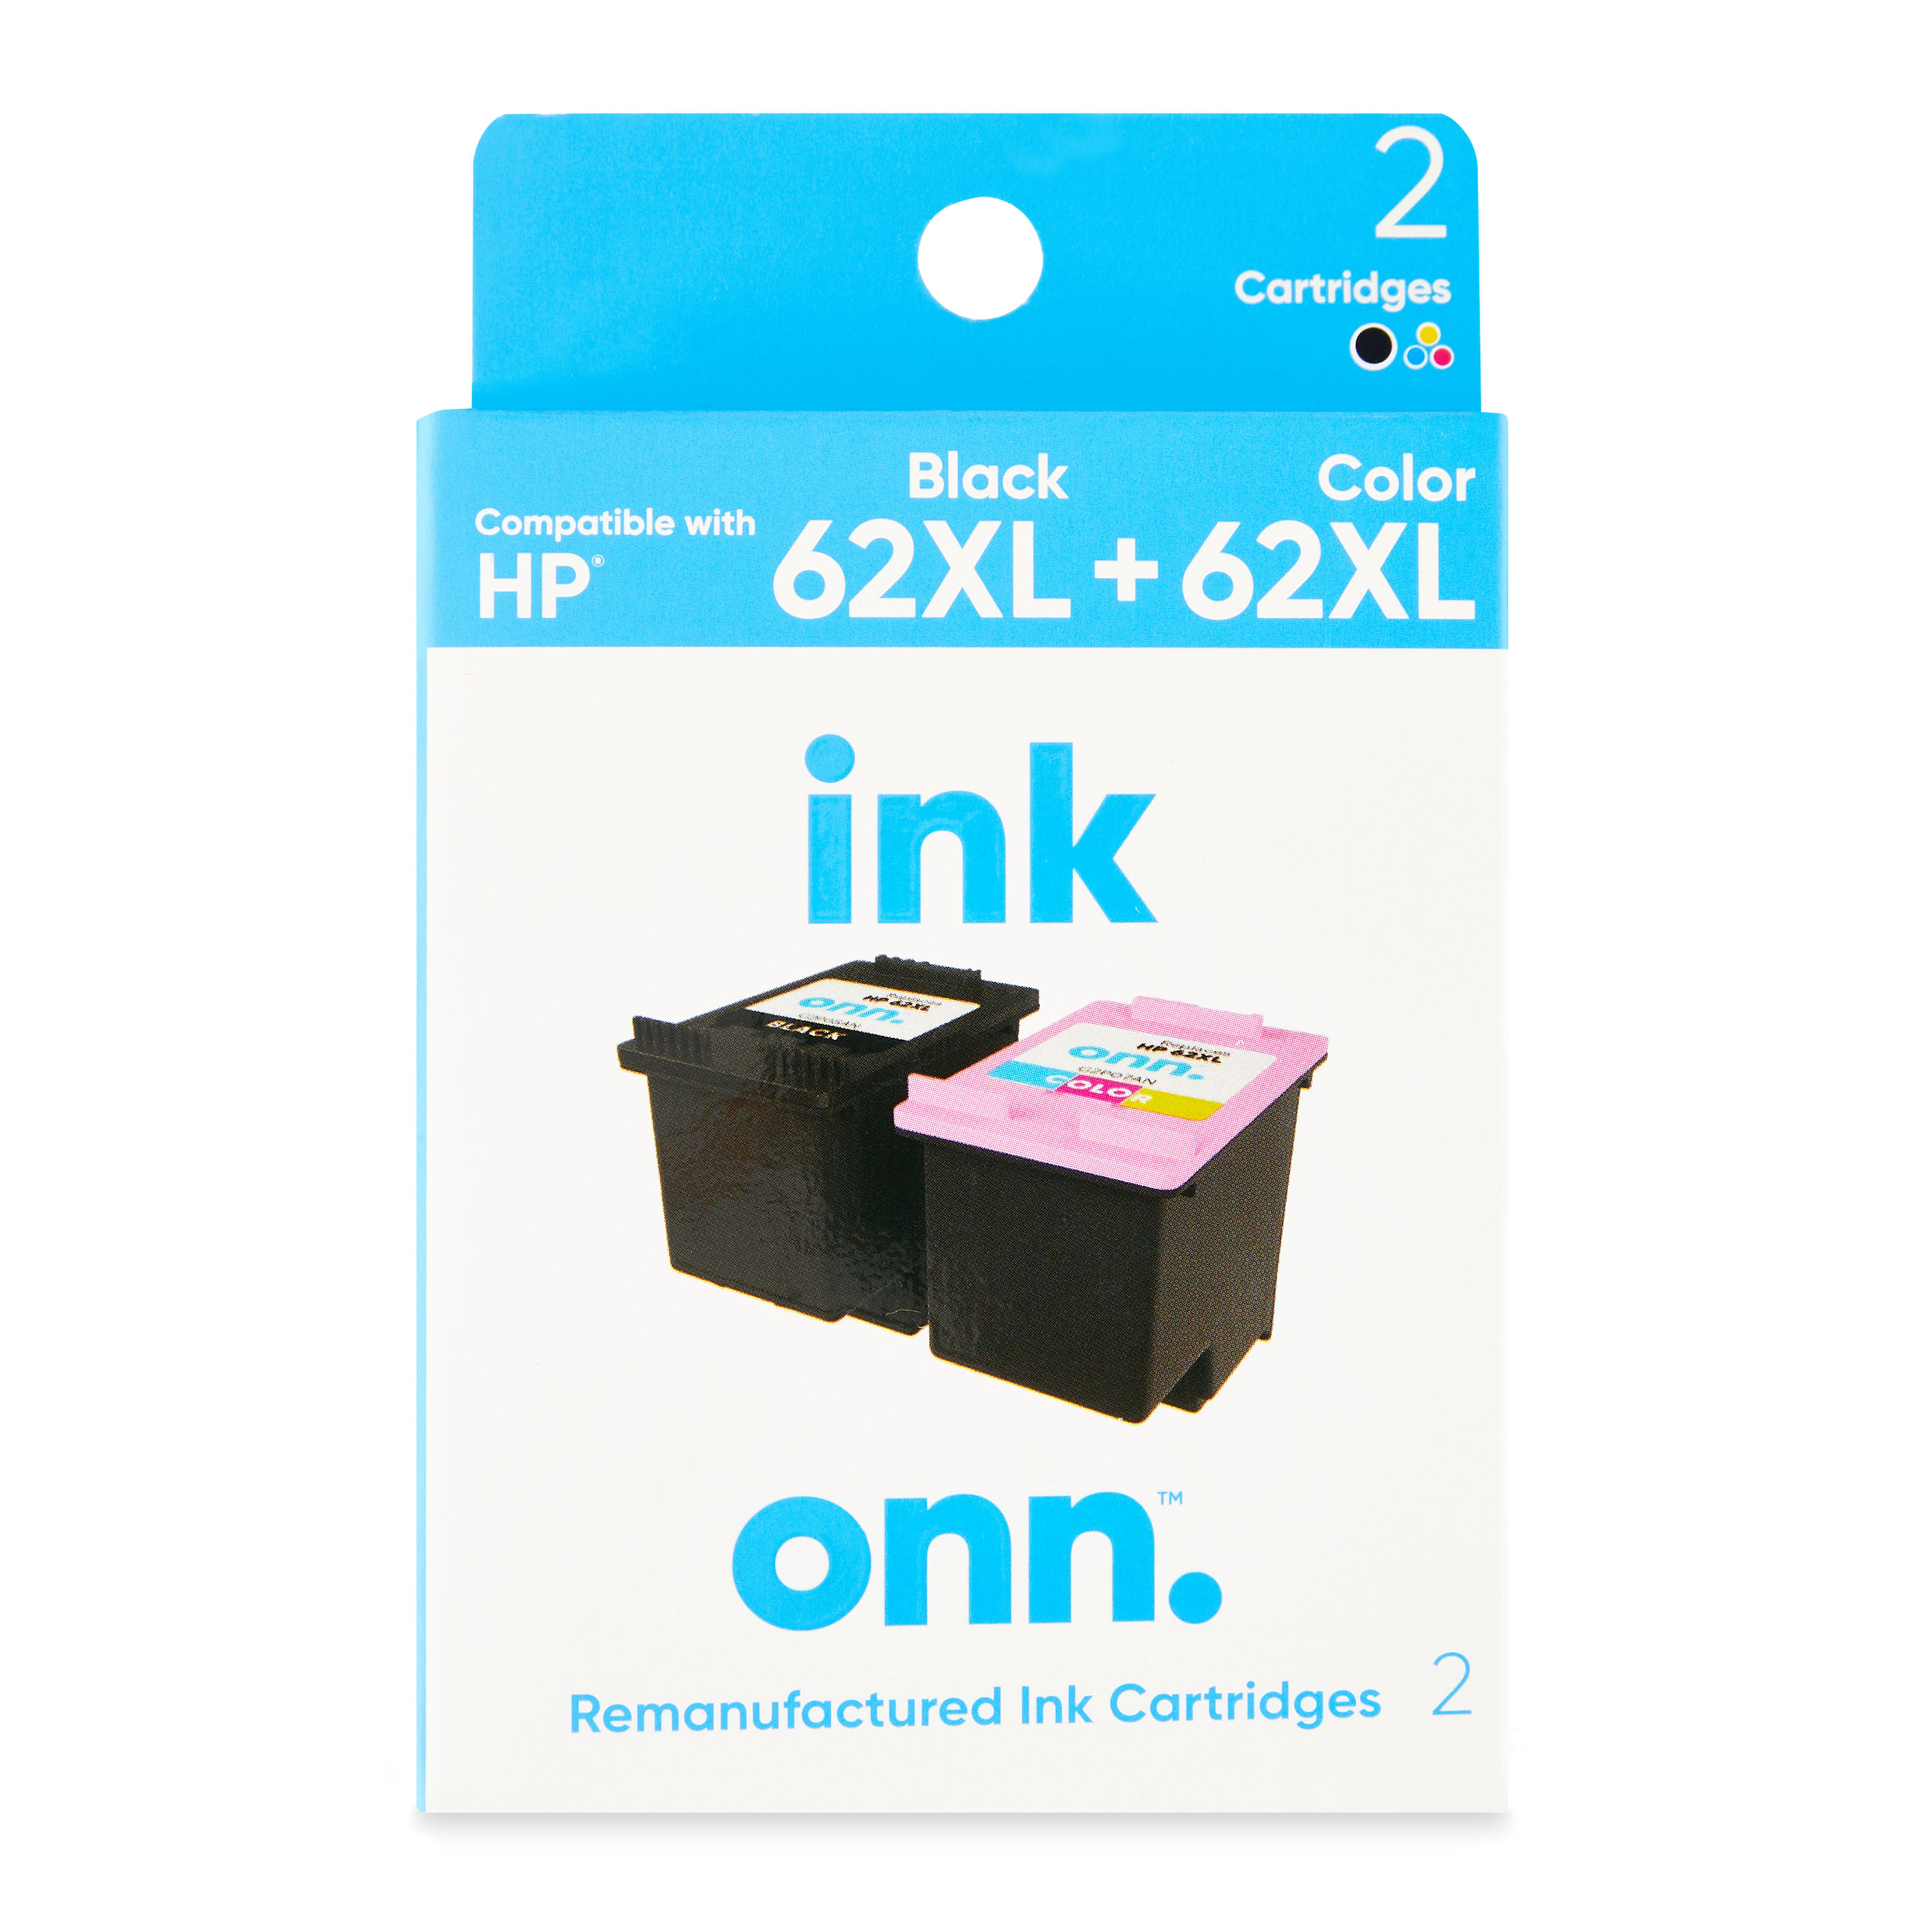 onn. Remanufactured Ink Cartridge, HP 62XL Black, 62XL Tri-Color (Cyan, Yellow, Magenta), 2 Cartridges - image 1 of 6